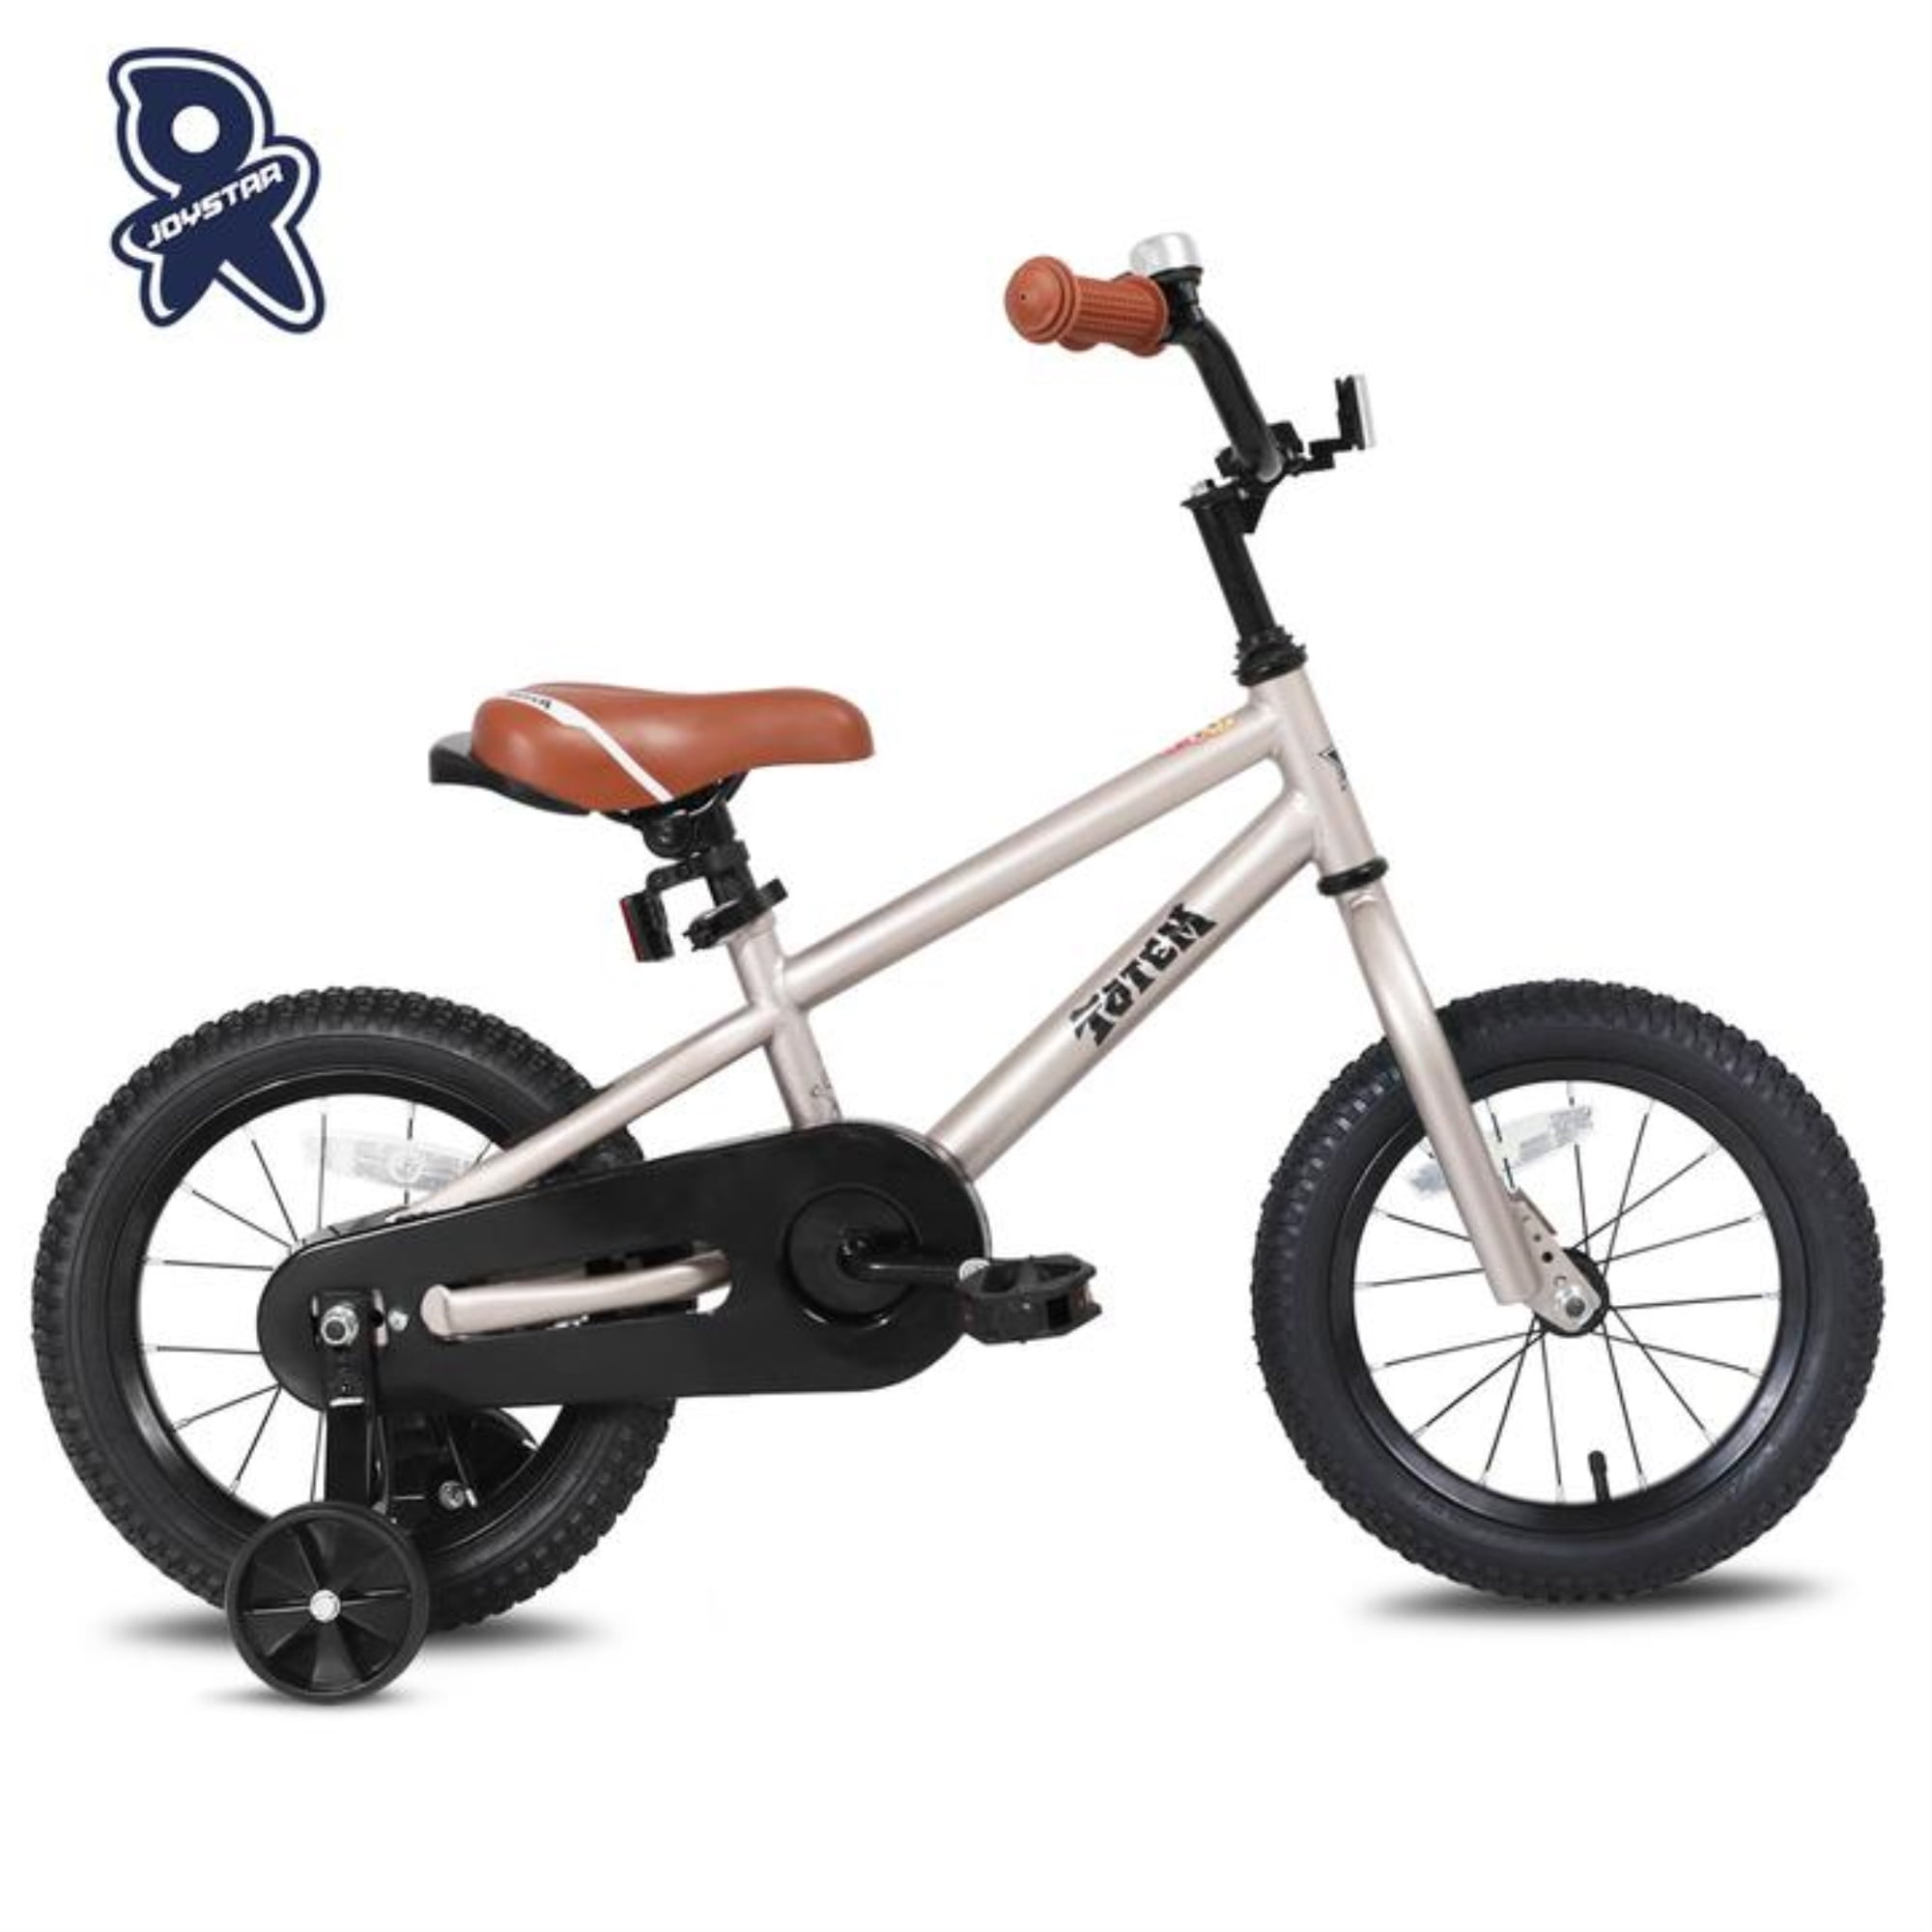 PhoenixX5 14 16 18 Inch Kids Bike For Boys Girls Ages 3-10 Toddler 95% Assembled 